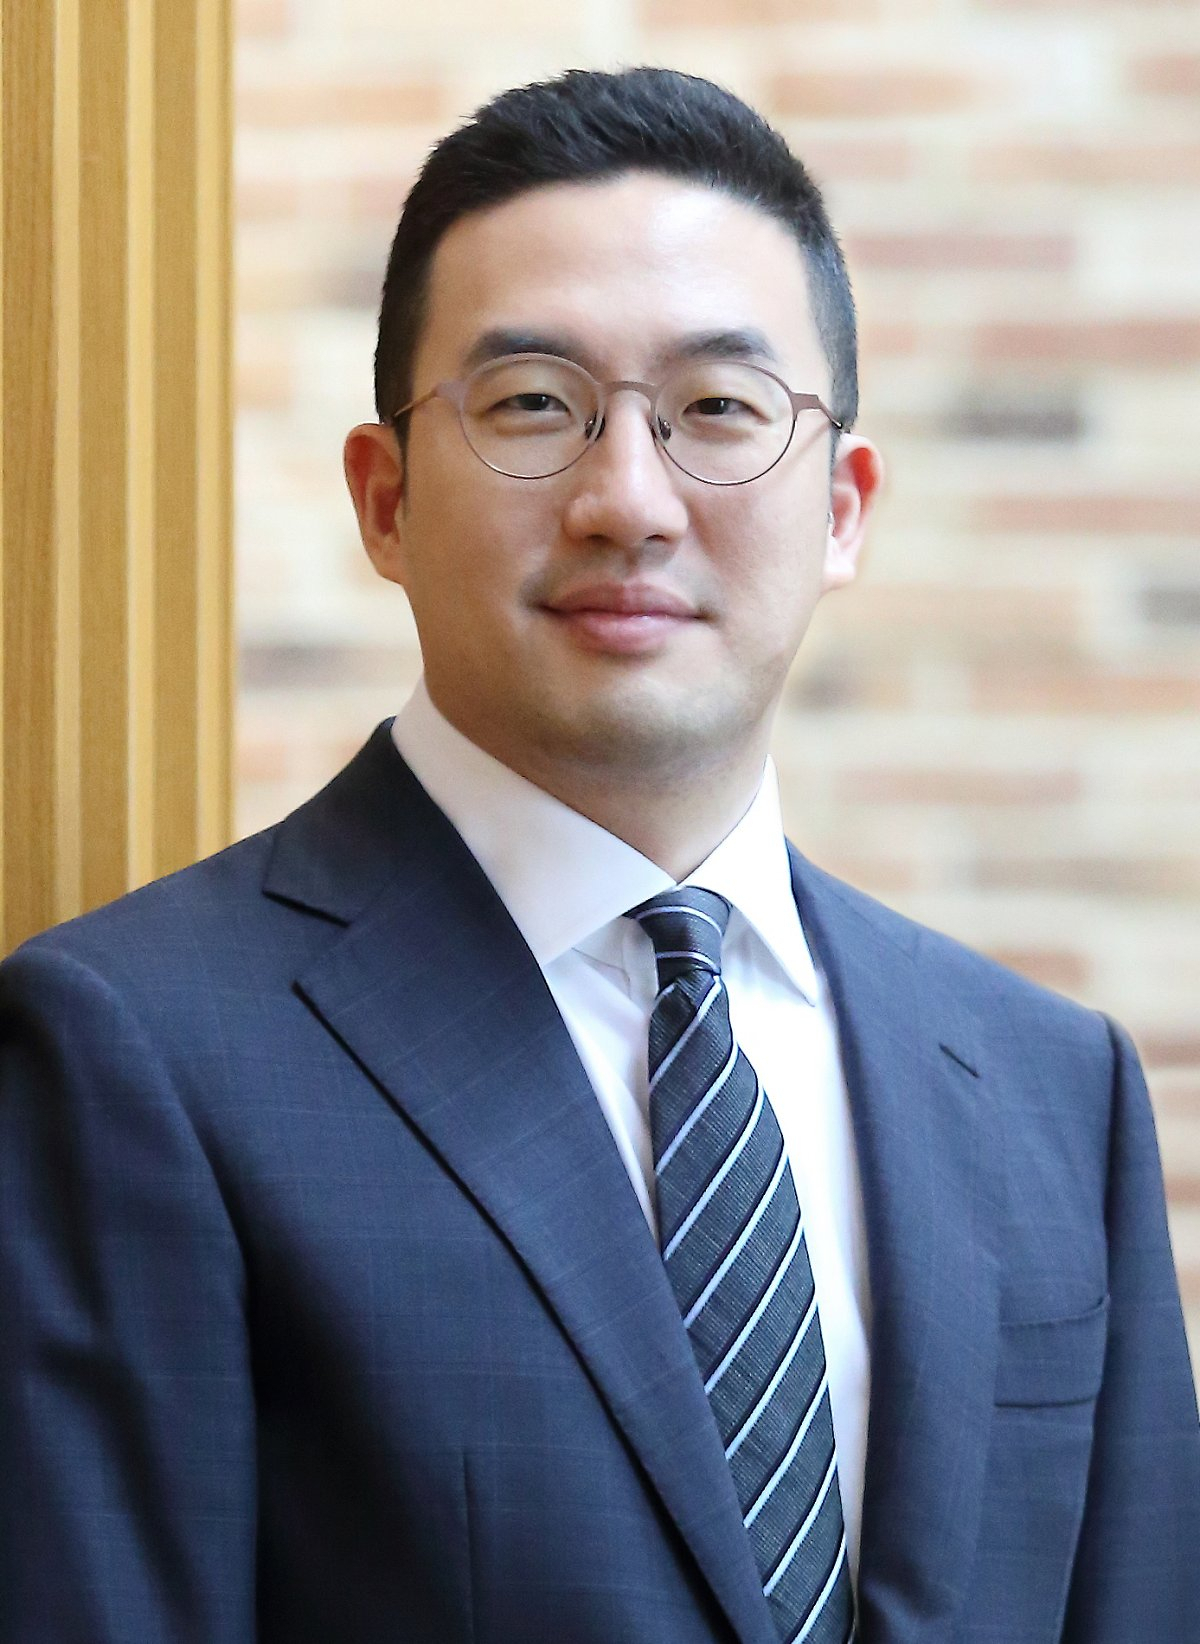 LG Group Chairman Koo Kwang-mo (LG Corp.)